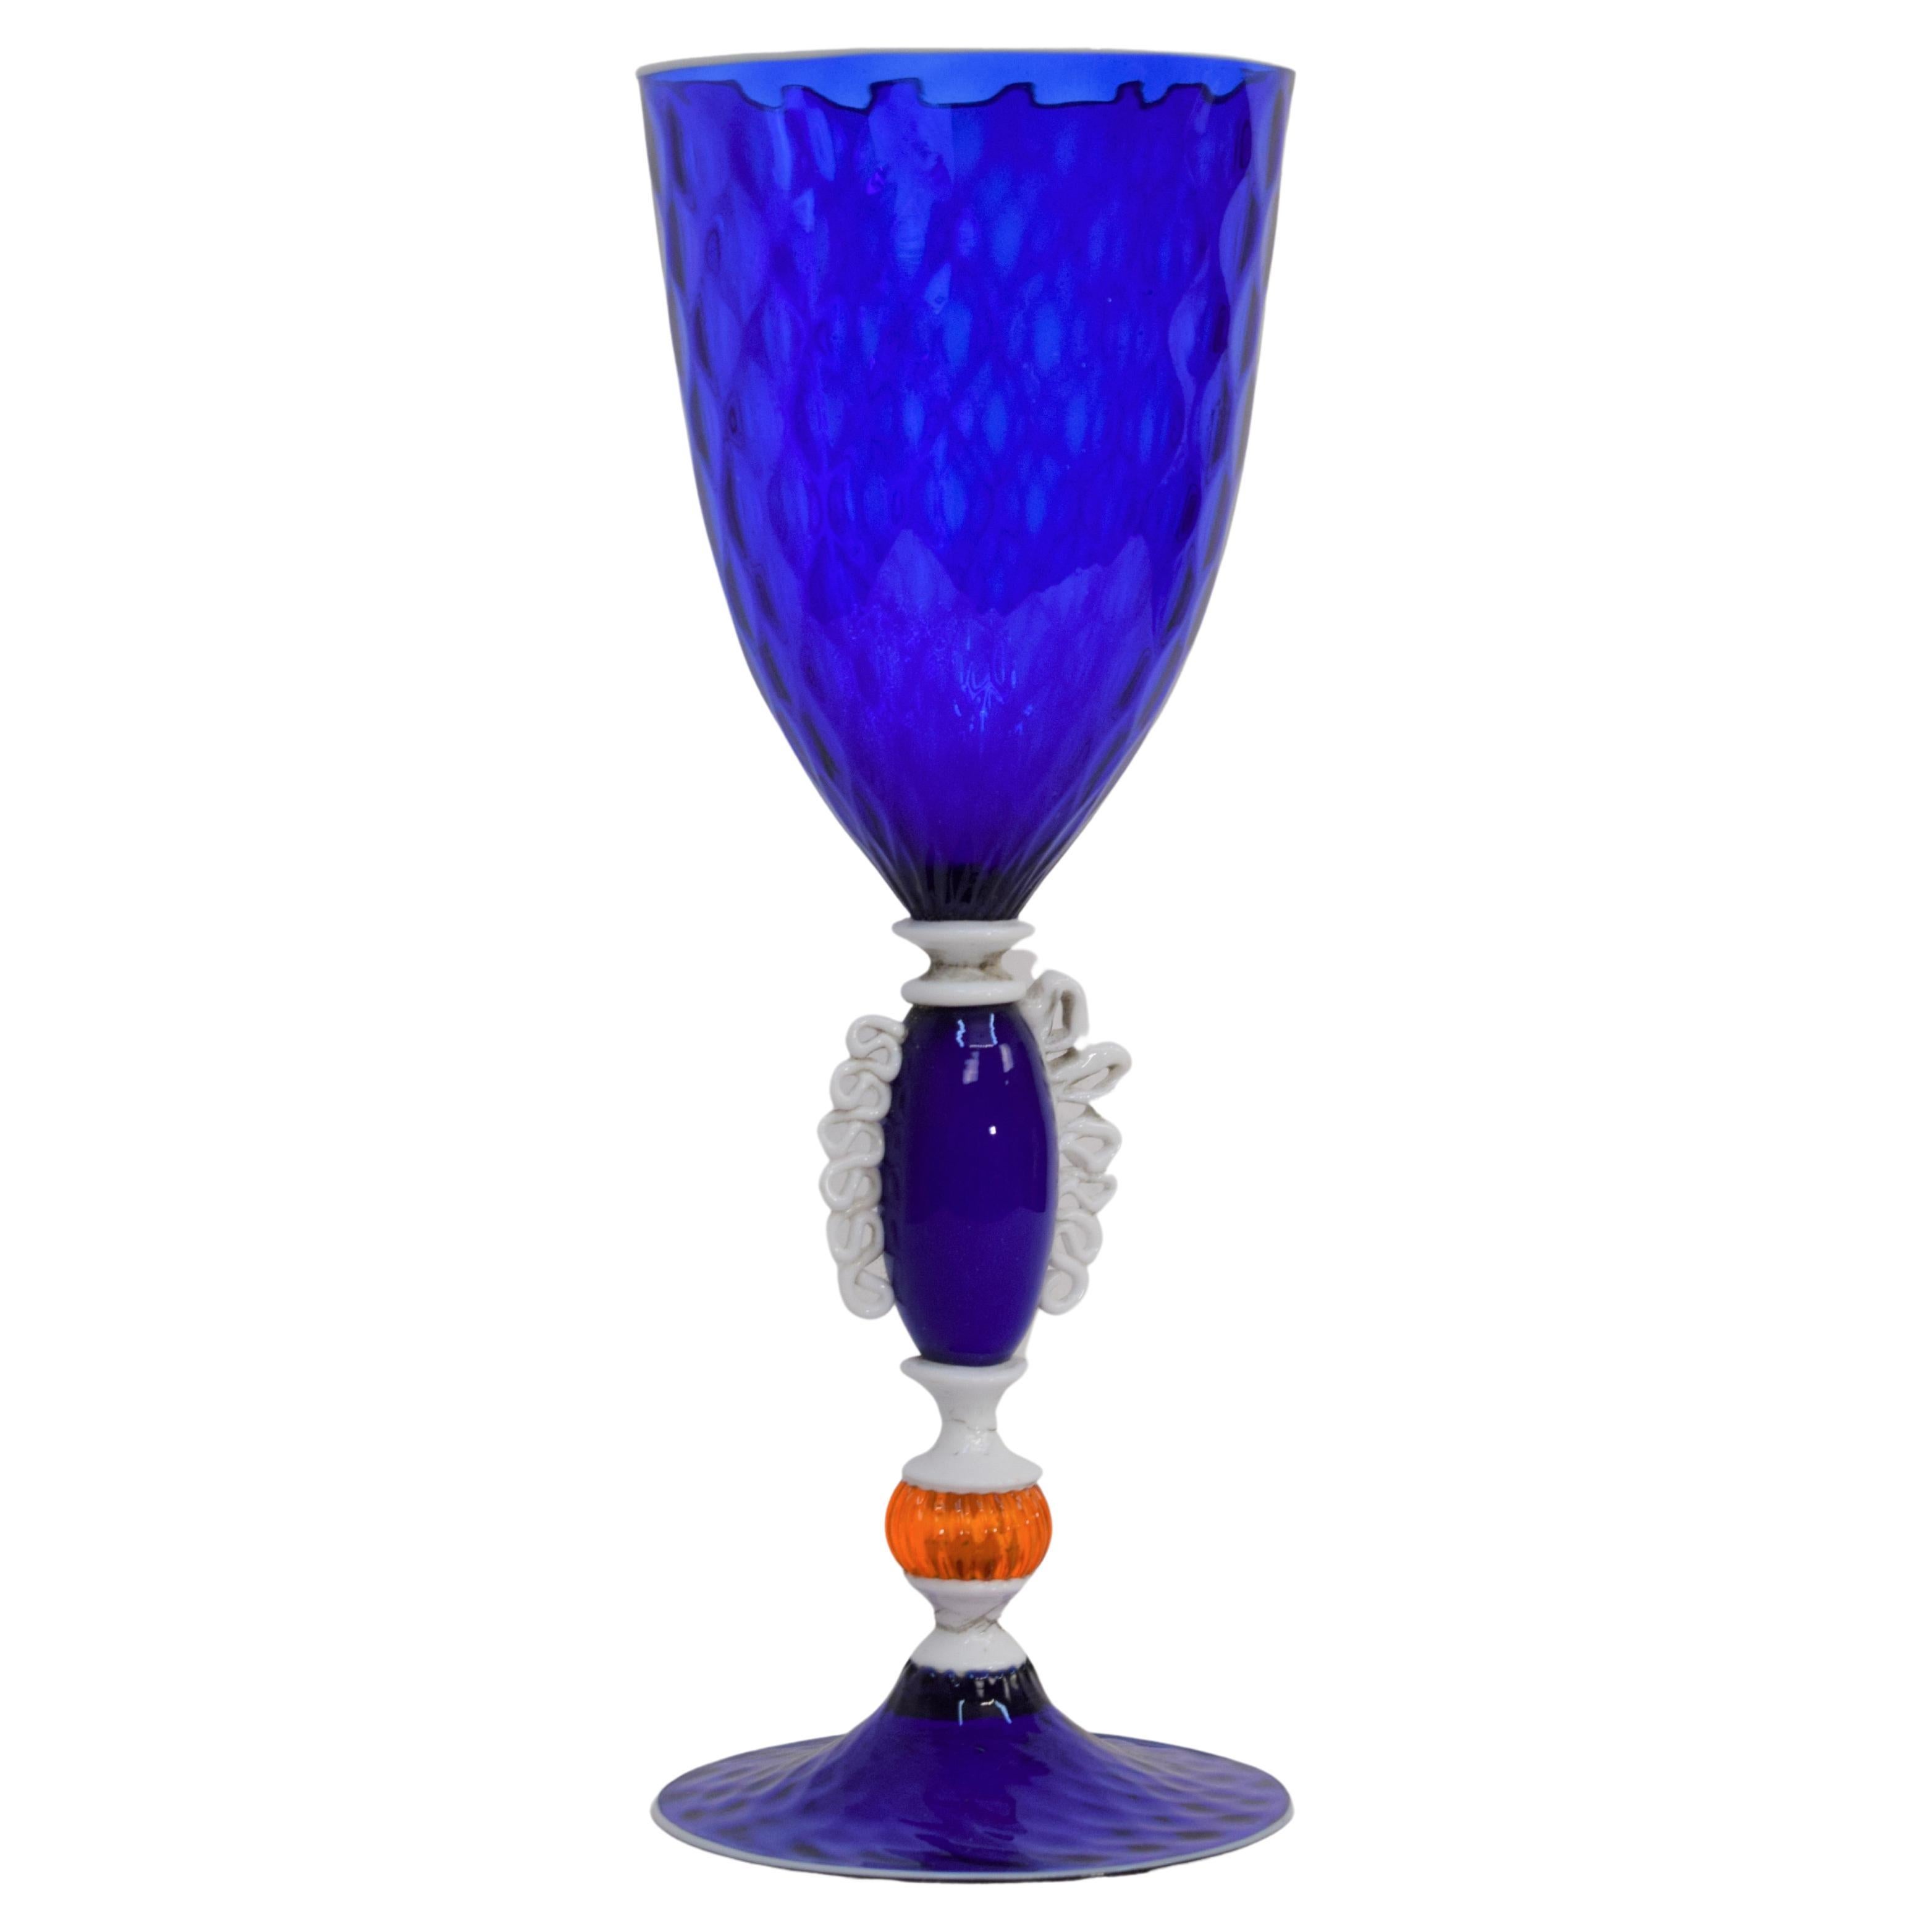 Murano-Glas-Globet, 1930er Jahre